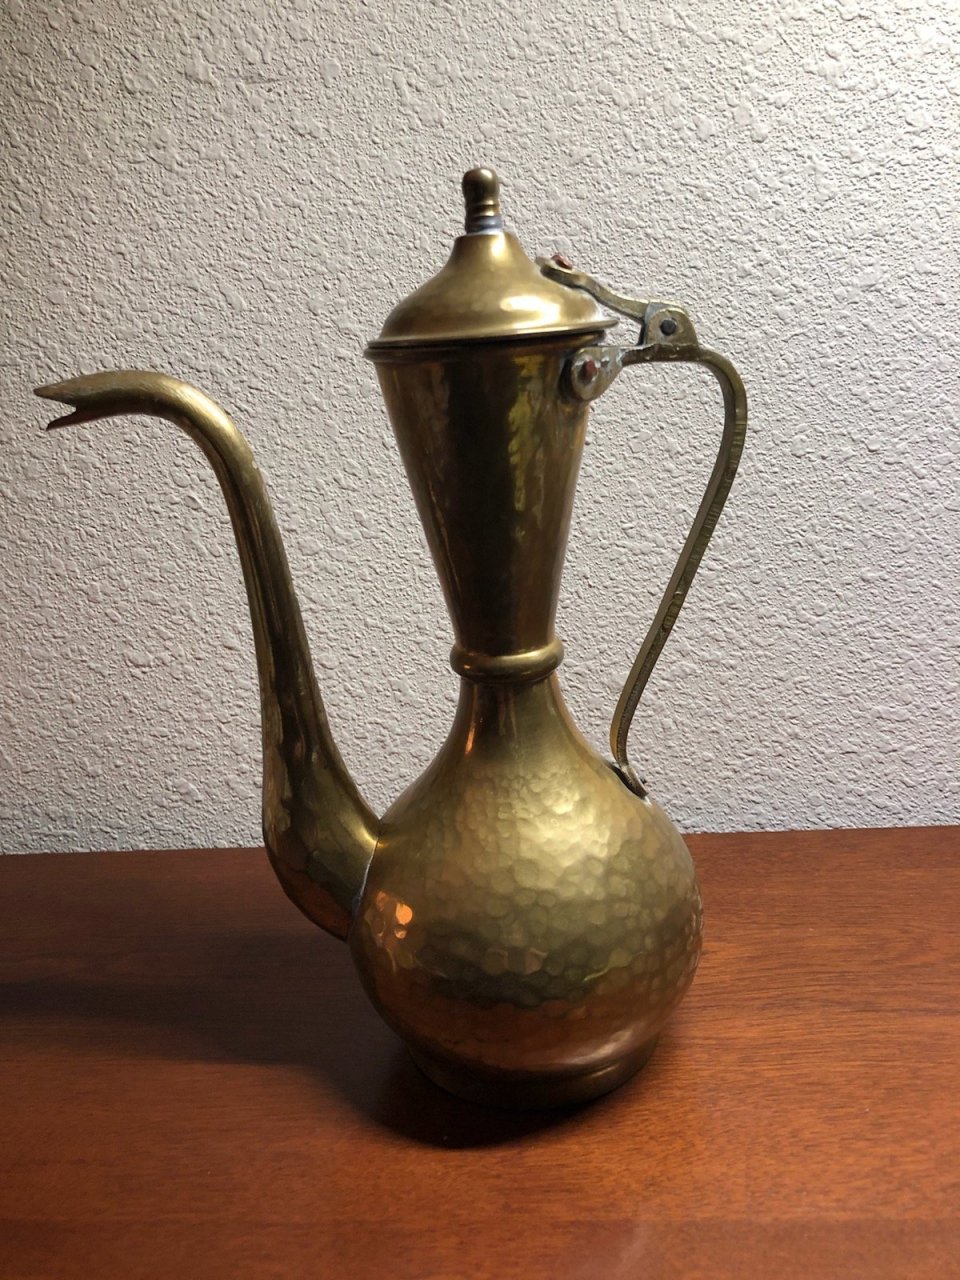 Coffee/teapot Markings - Help Id'ing It | Artifact Collectors